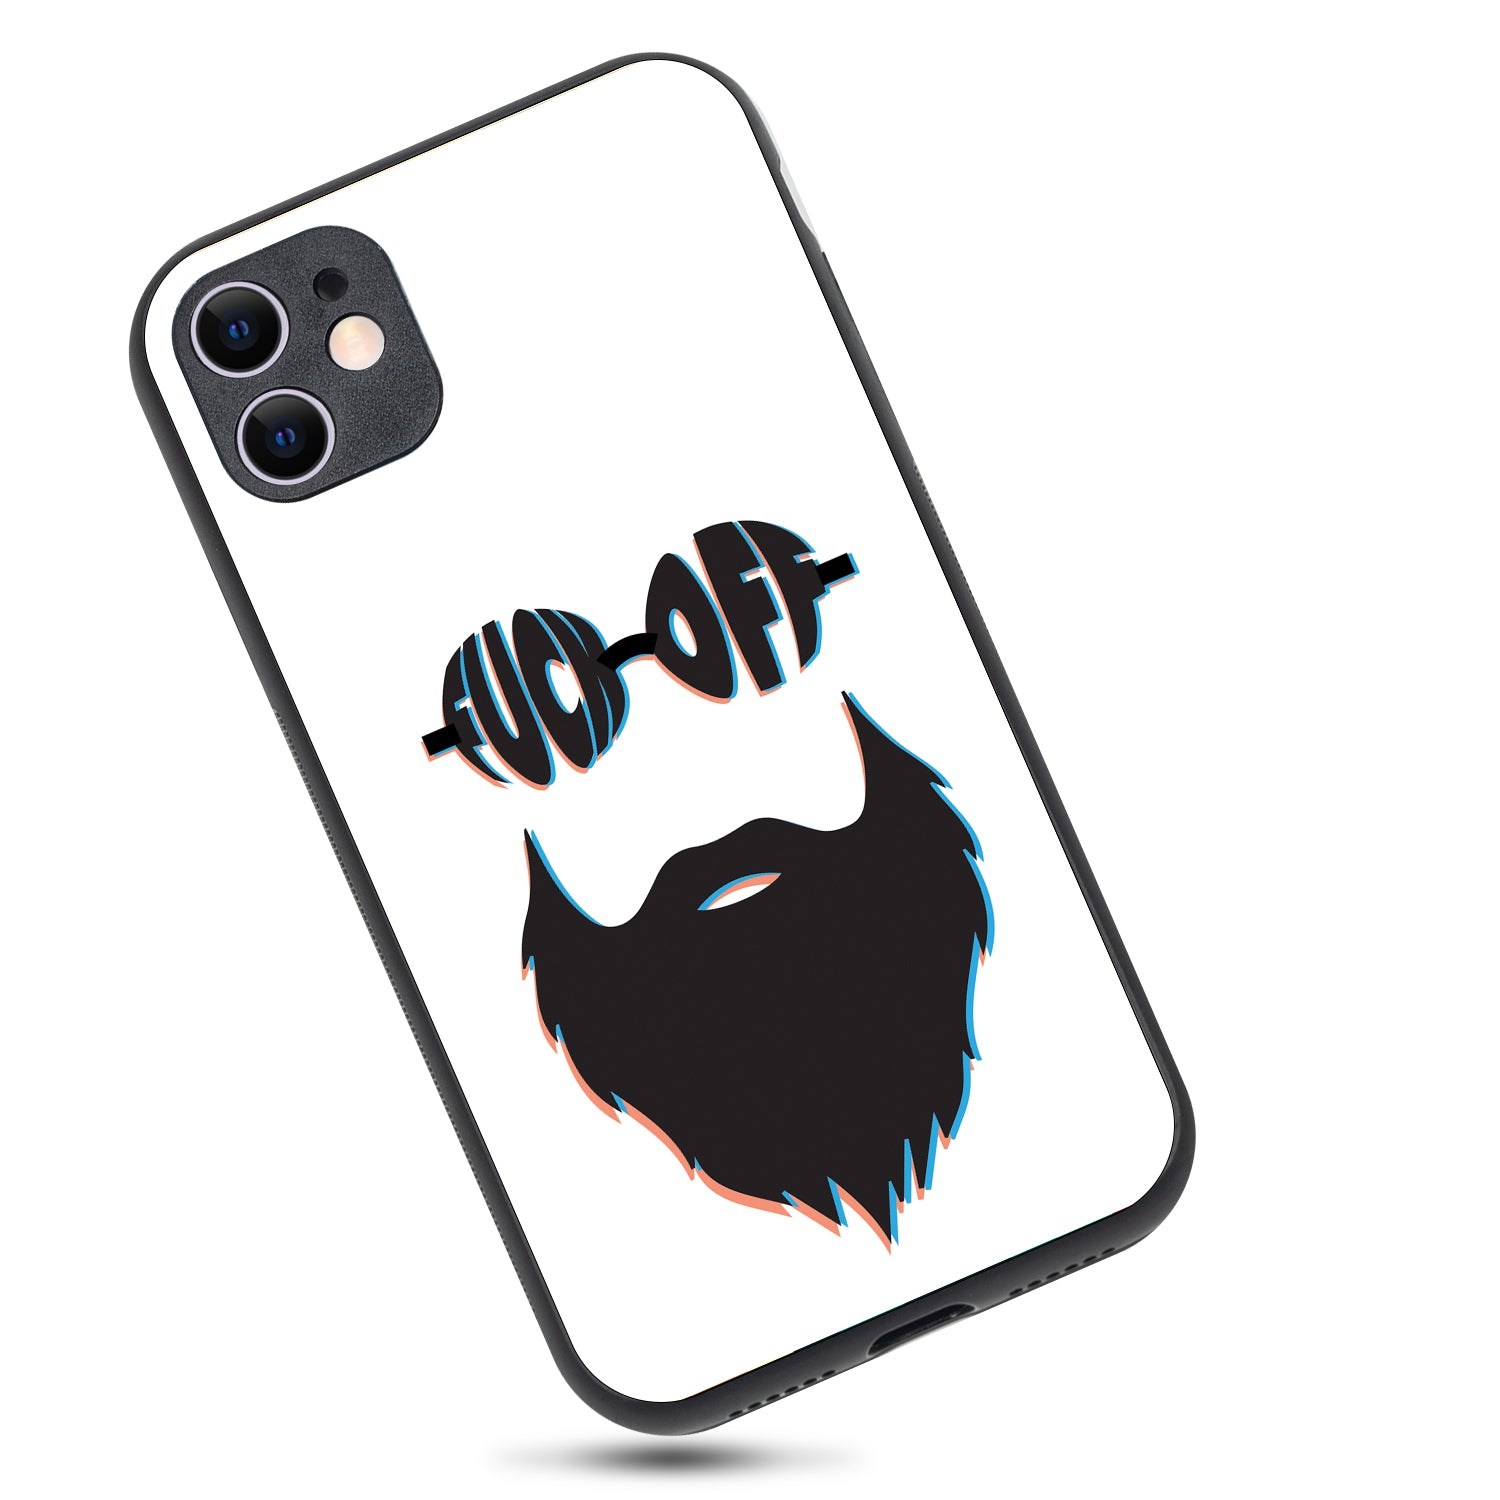 Beard White Masculine iPhone 11 Case